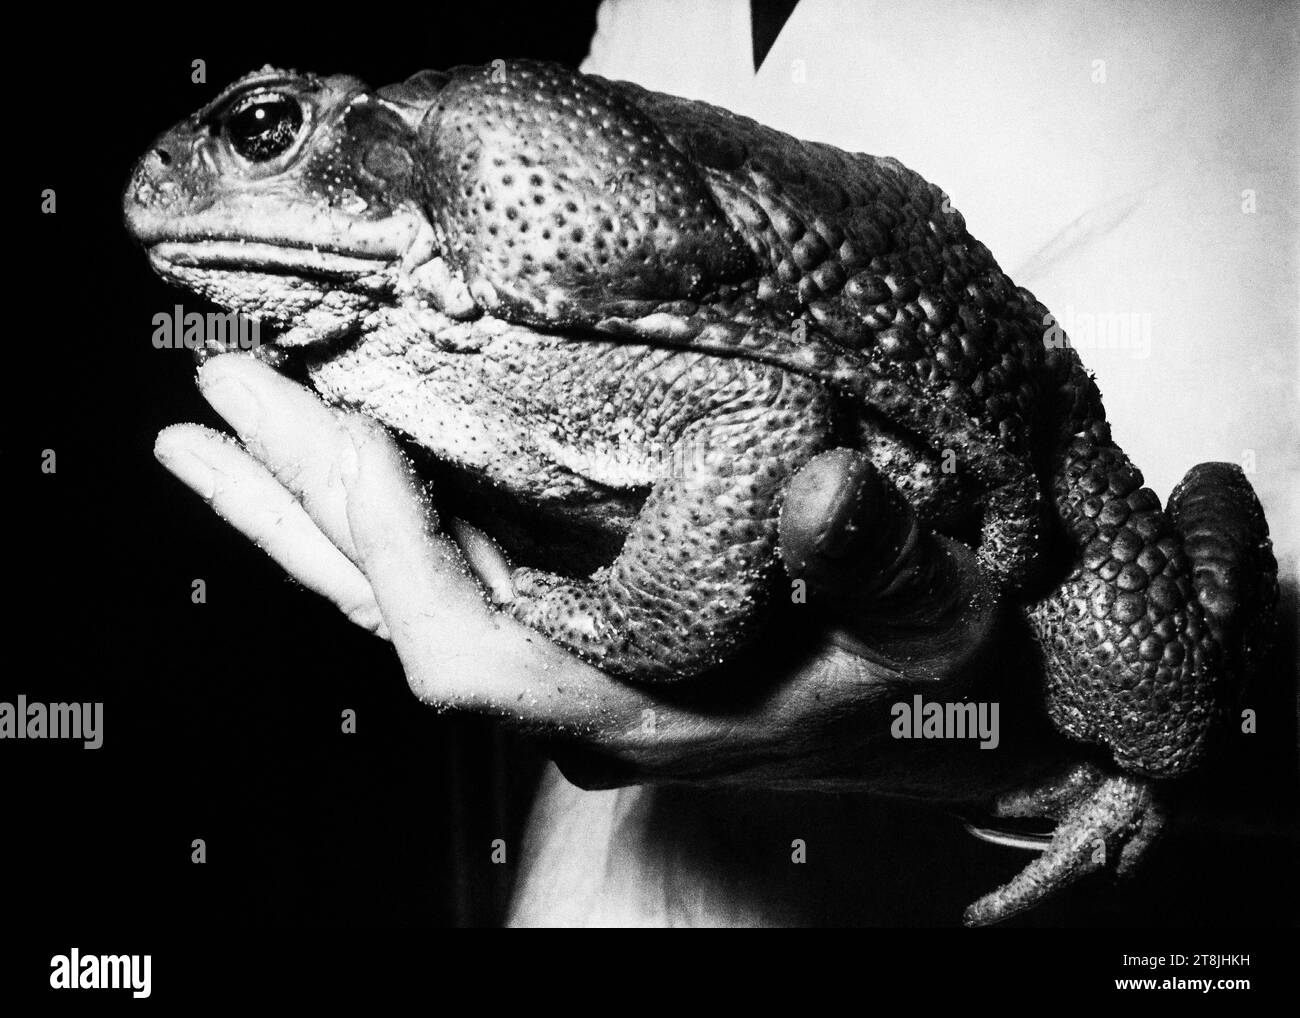 Bufo marinus 'Cane Toadd' - crapaud psychoactif Banque D'Images